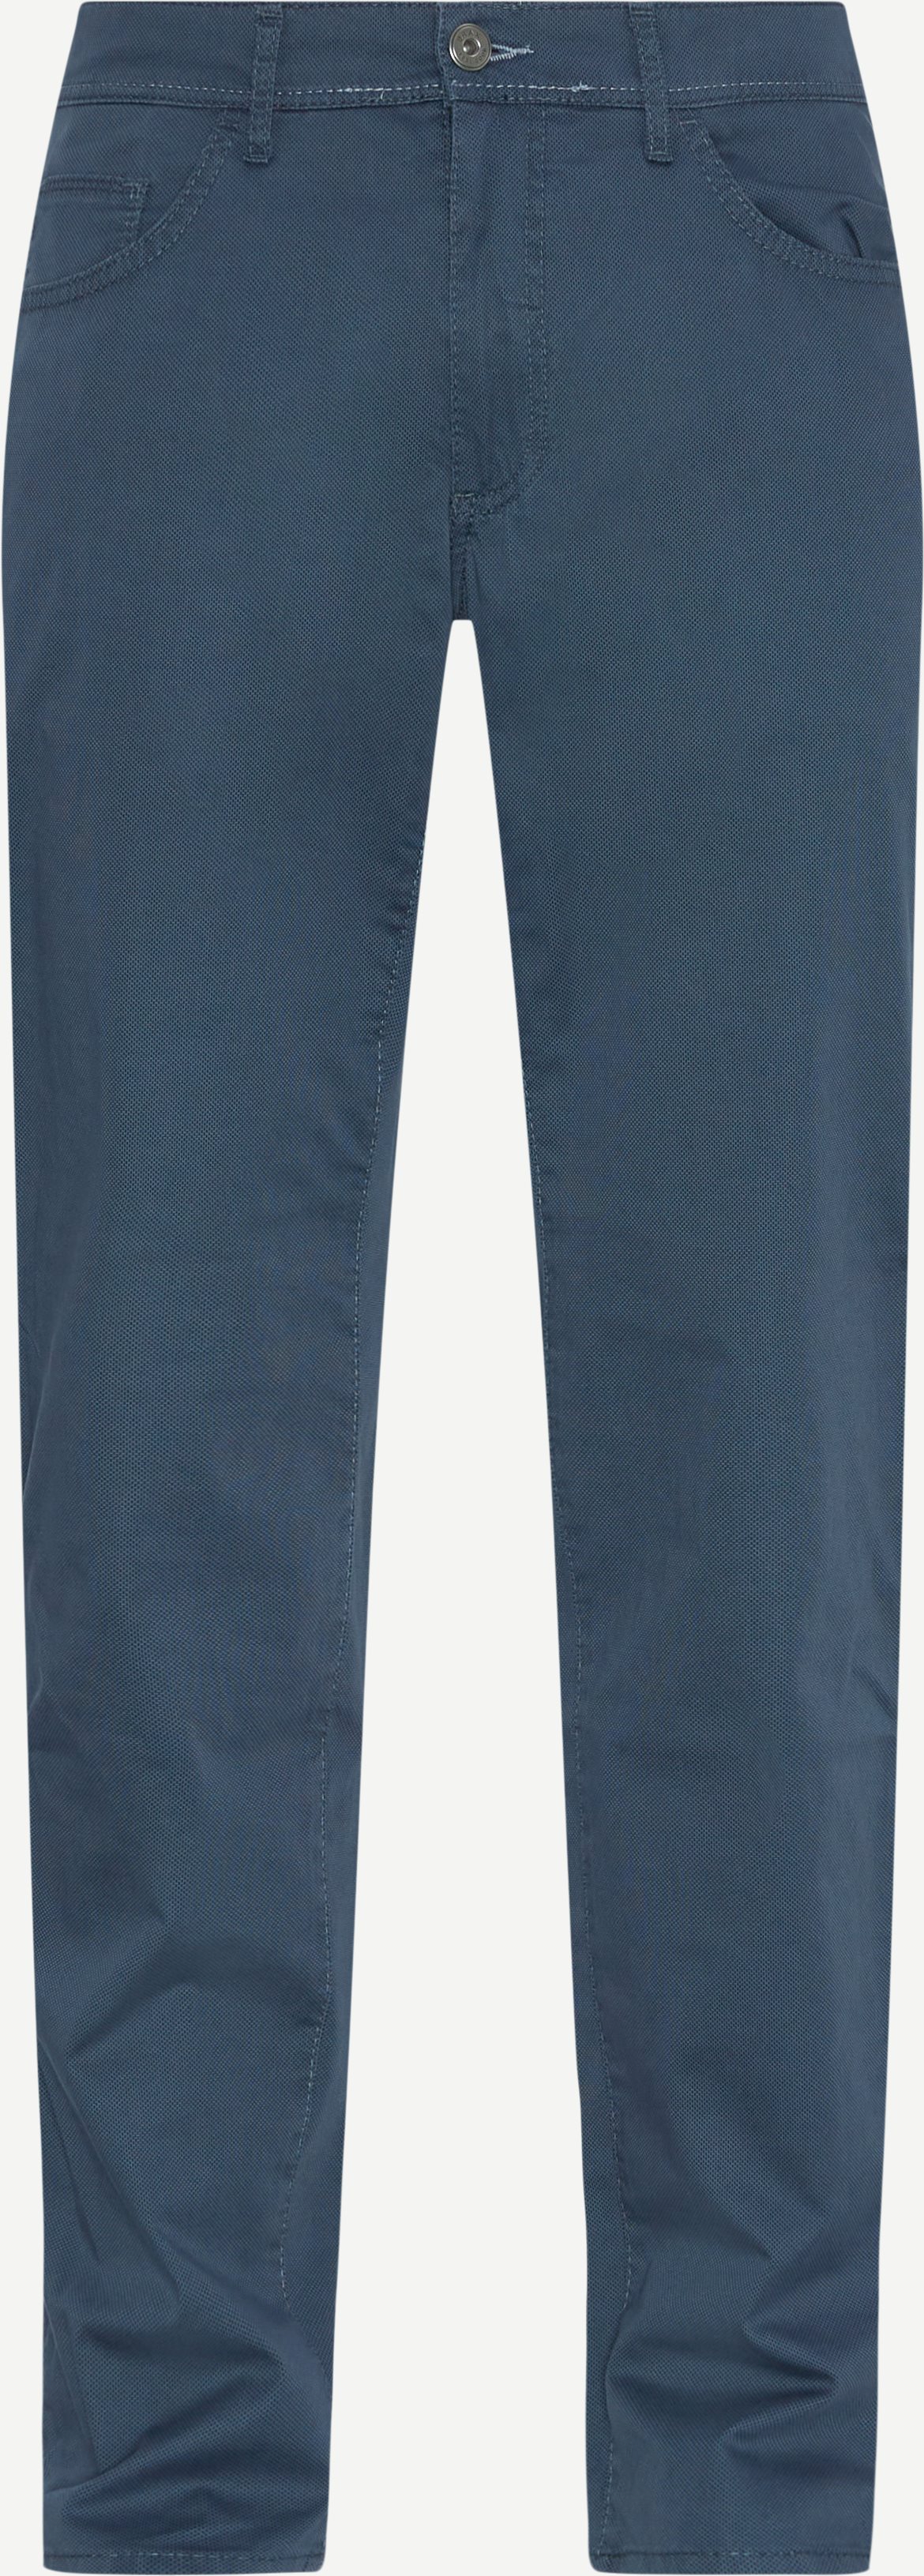 Brax Jeans 81-1208 CADIZ Blue